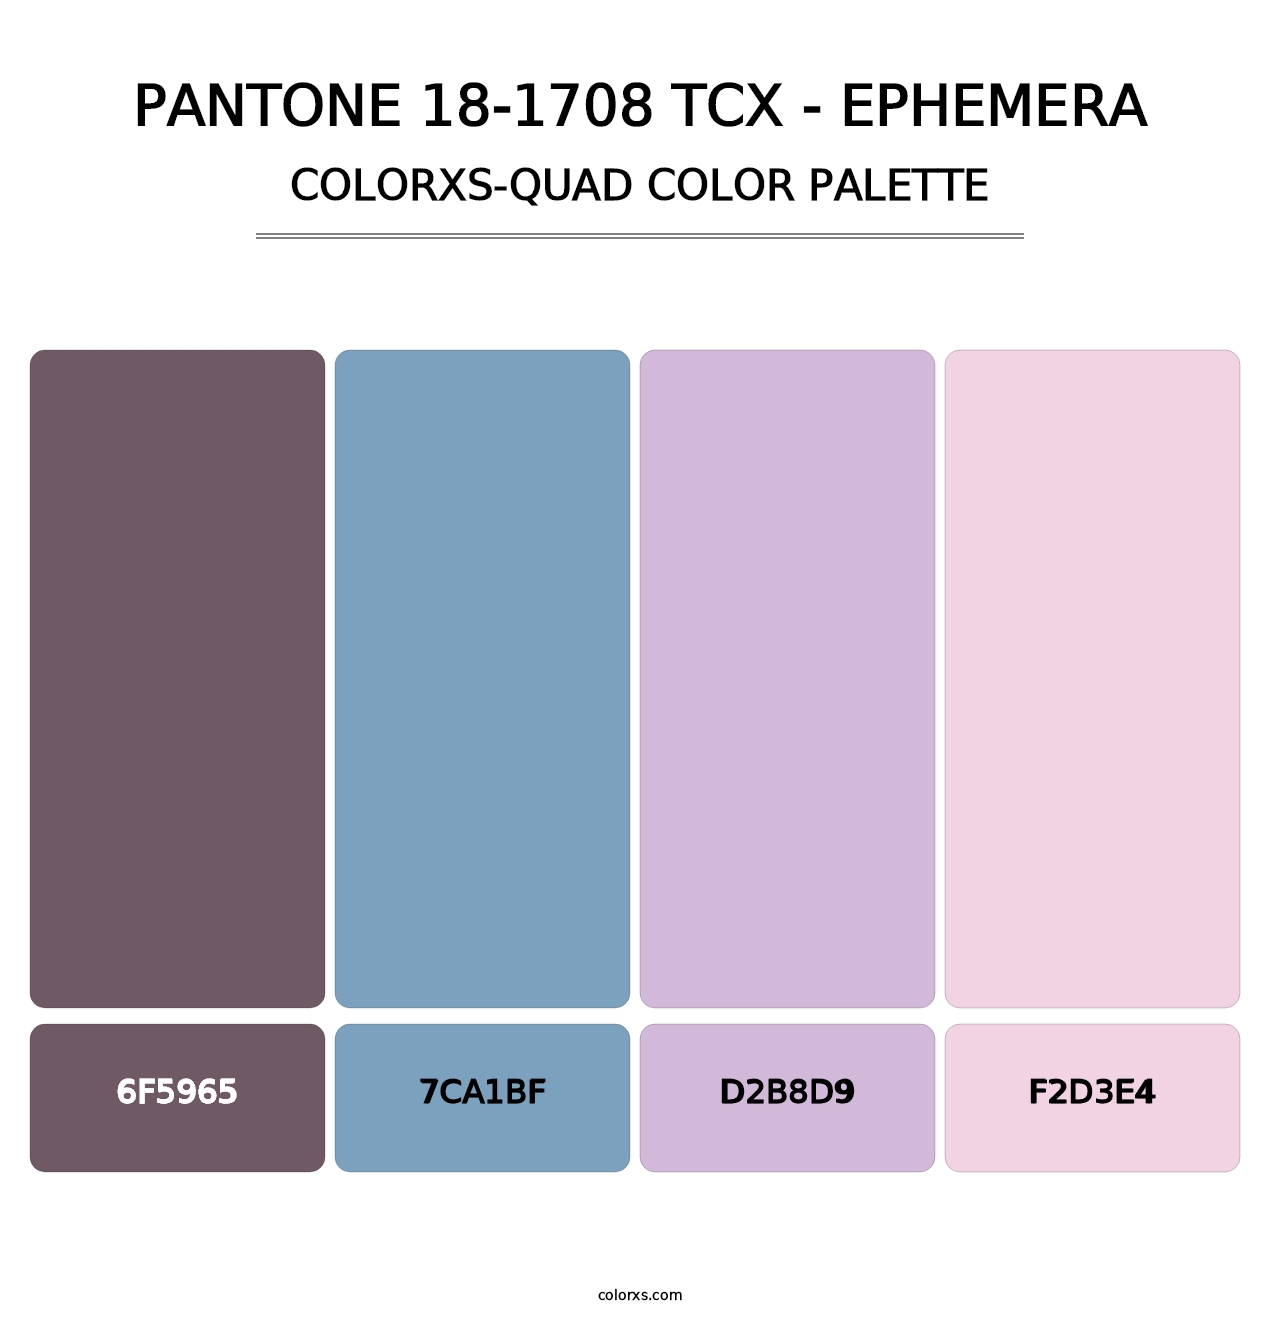 PANTONE 18-1708 TCX - Ephemera - Colorxs Quad Palette